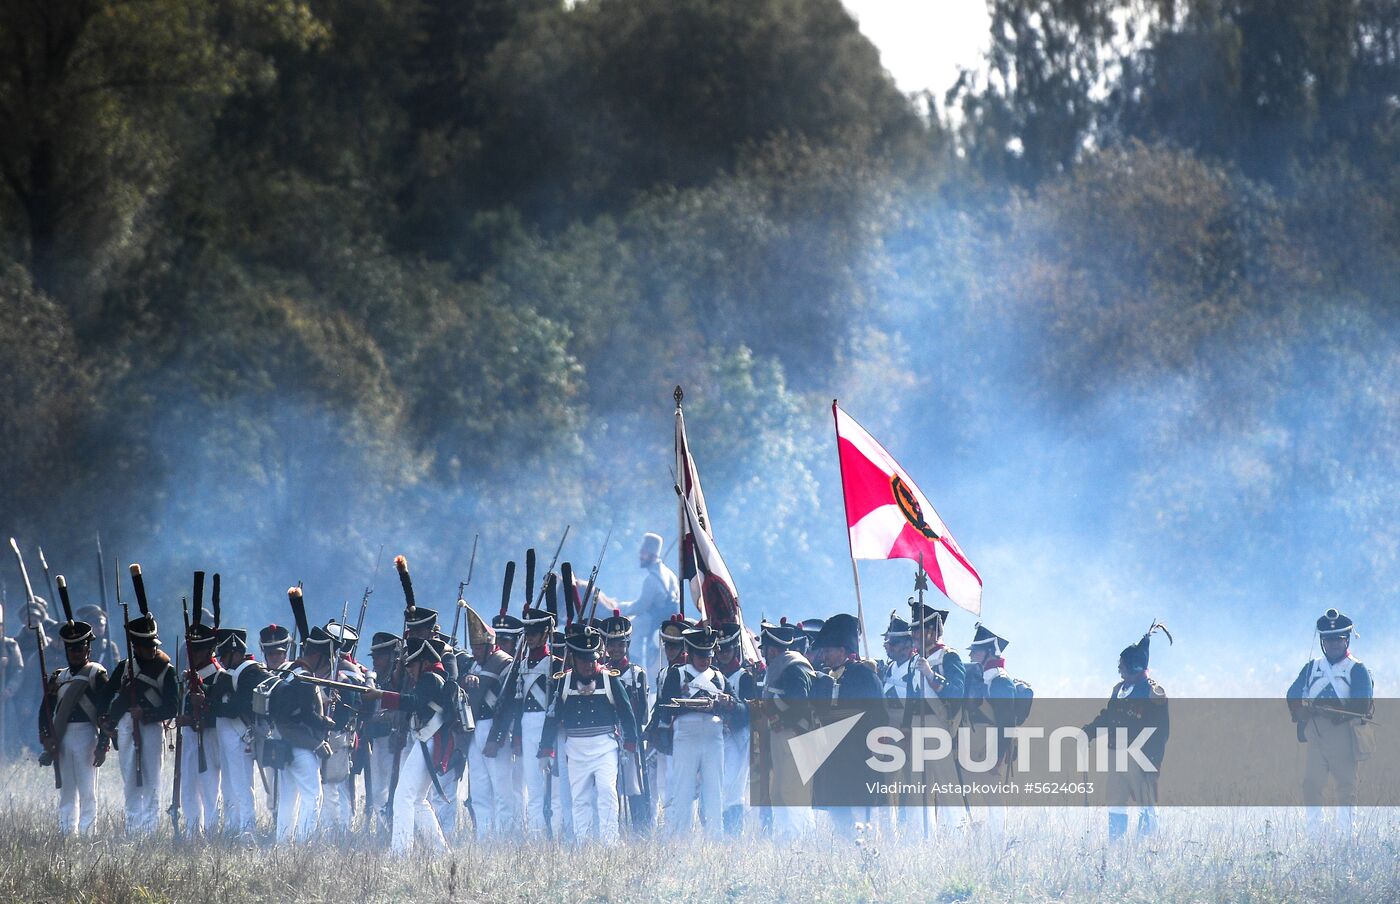 2018 Borodino Day military history festival